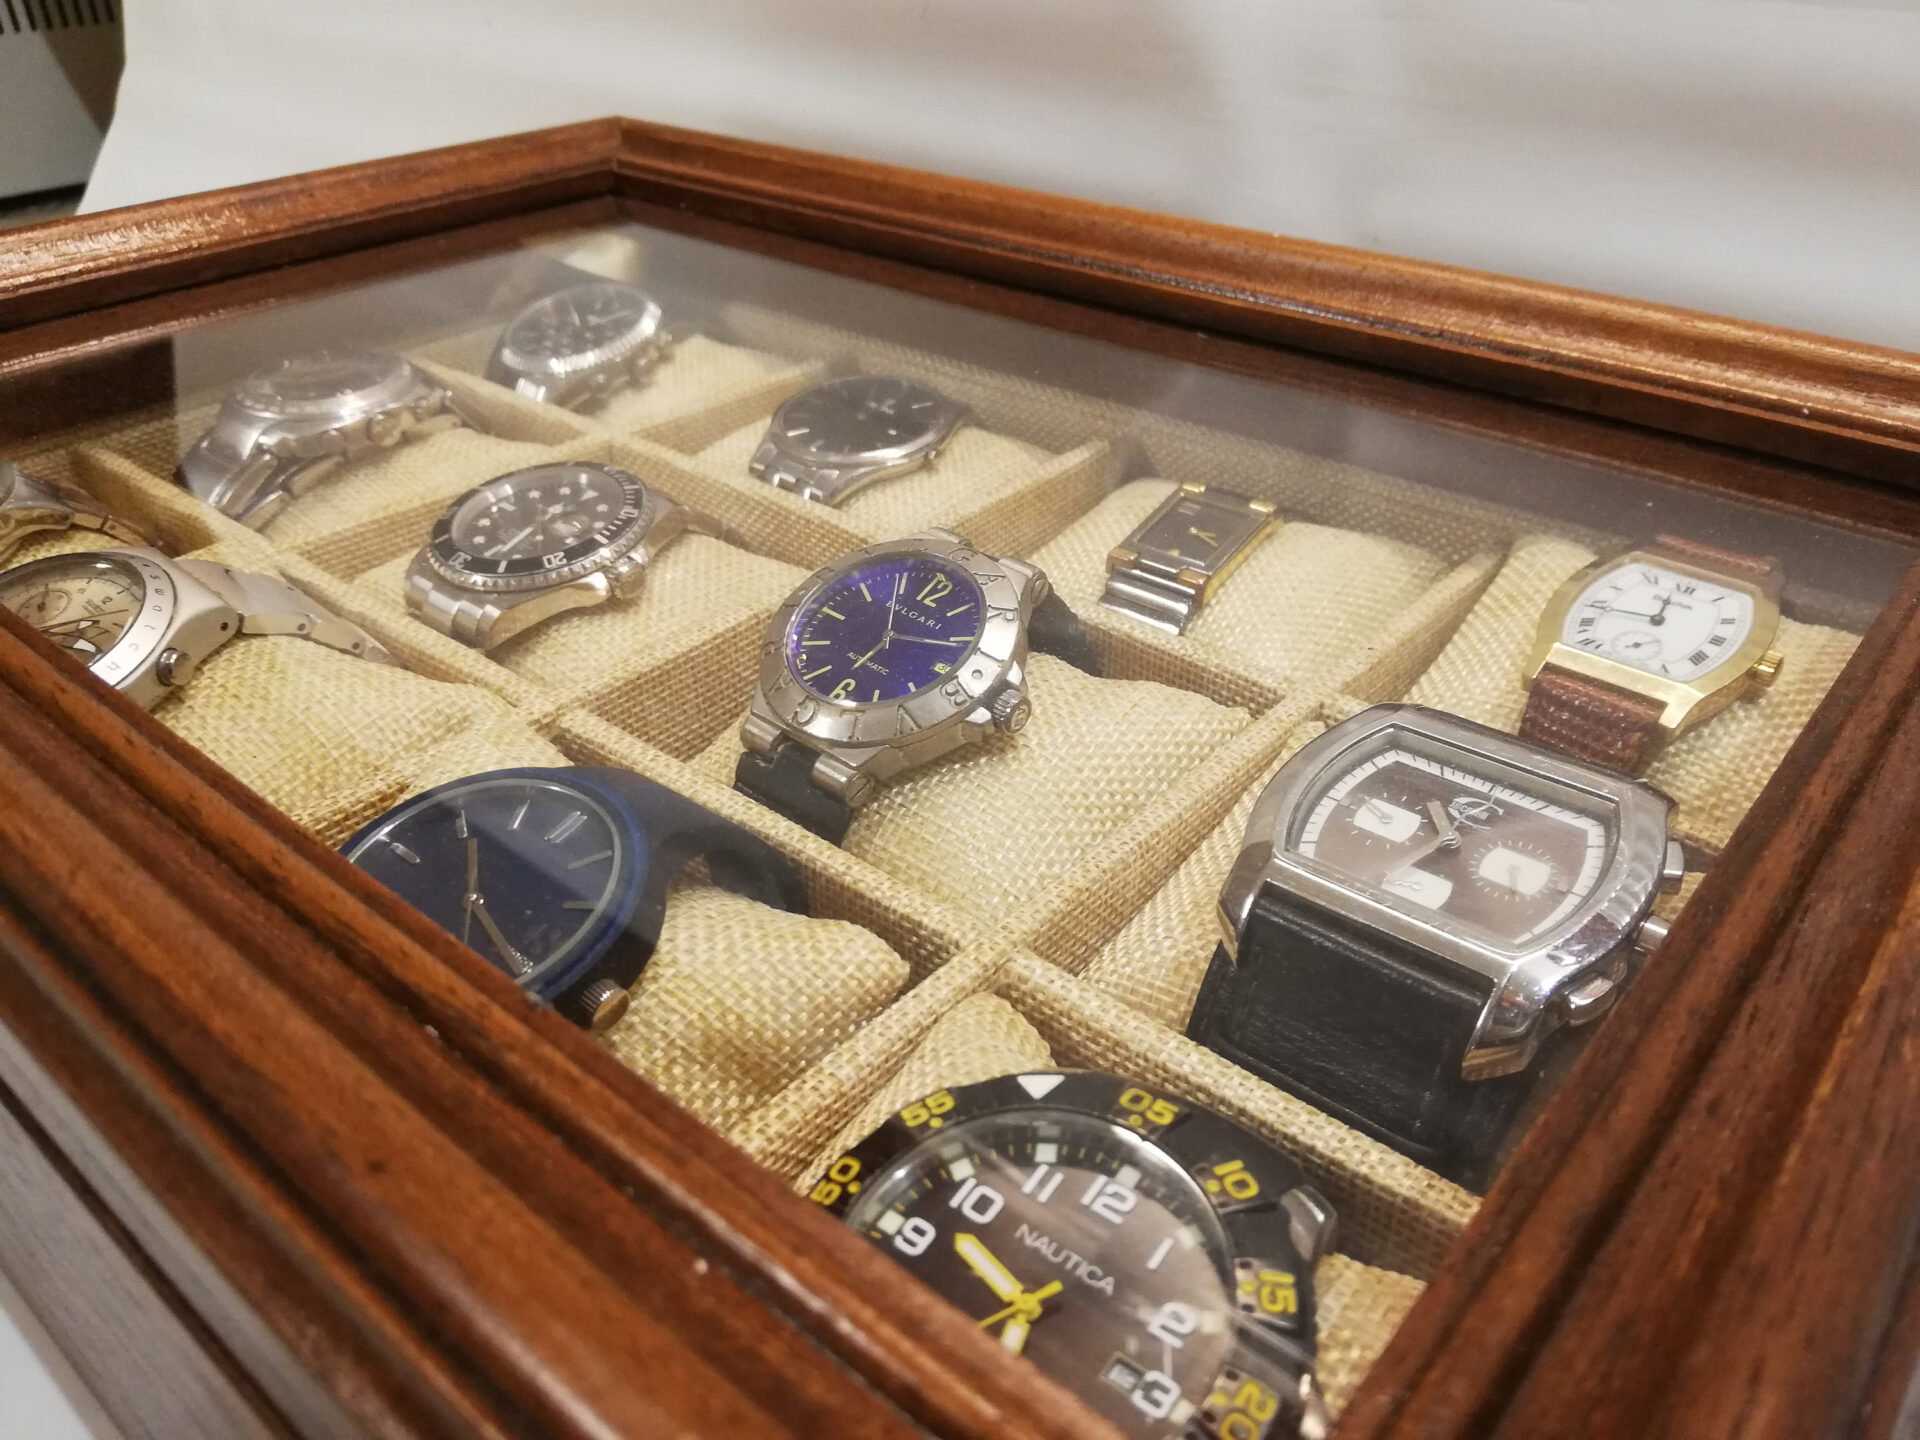 Watch Storage DIY - Caja para guardar relojes!!!